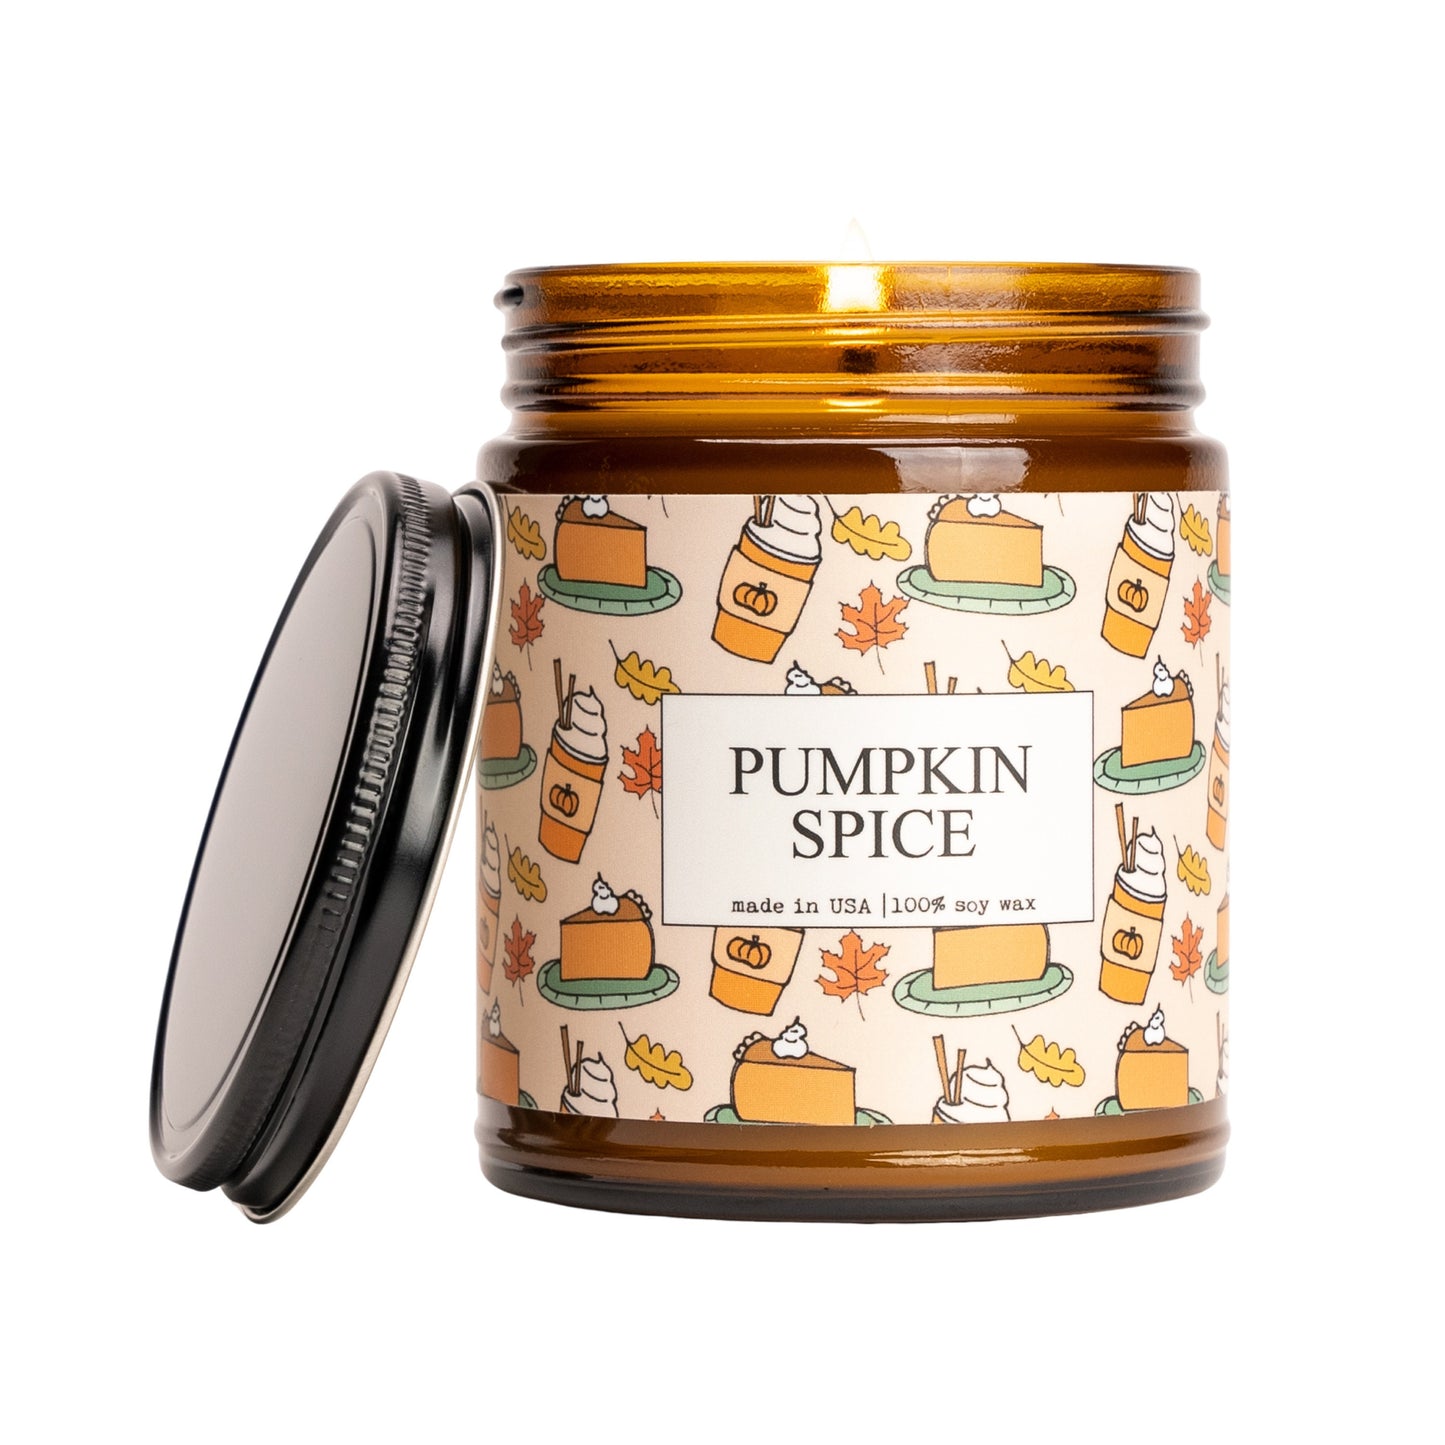 Pumpkin Spice Wax Melt Cubes – Moon Glow Bath Company